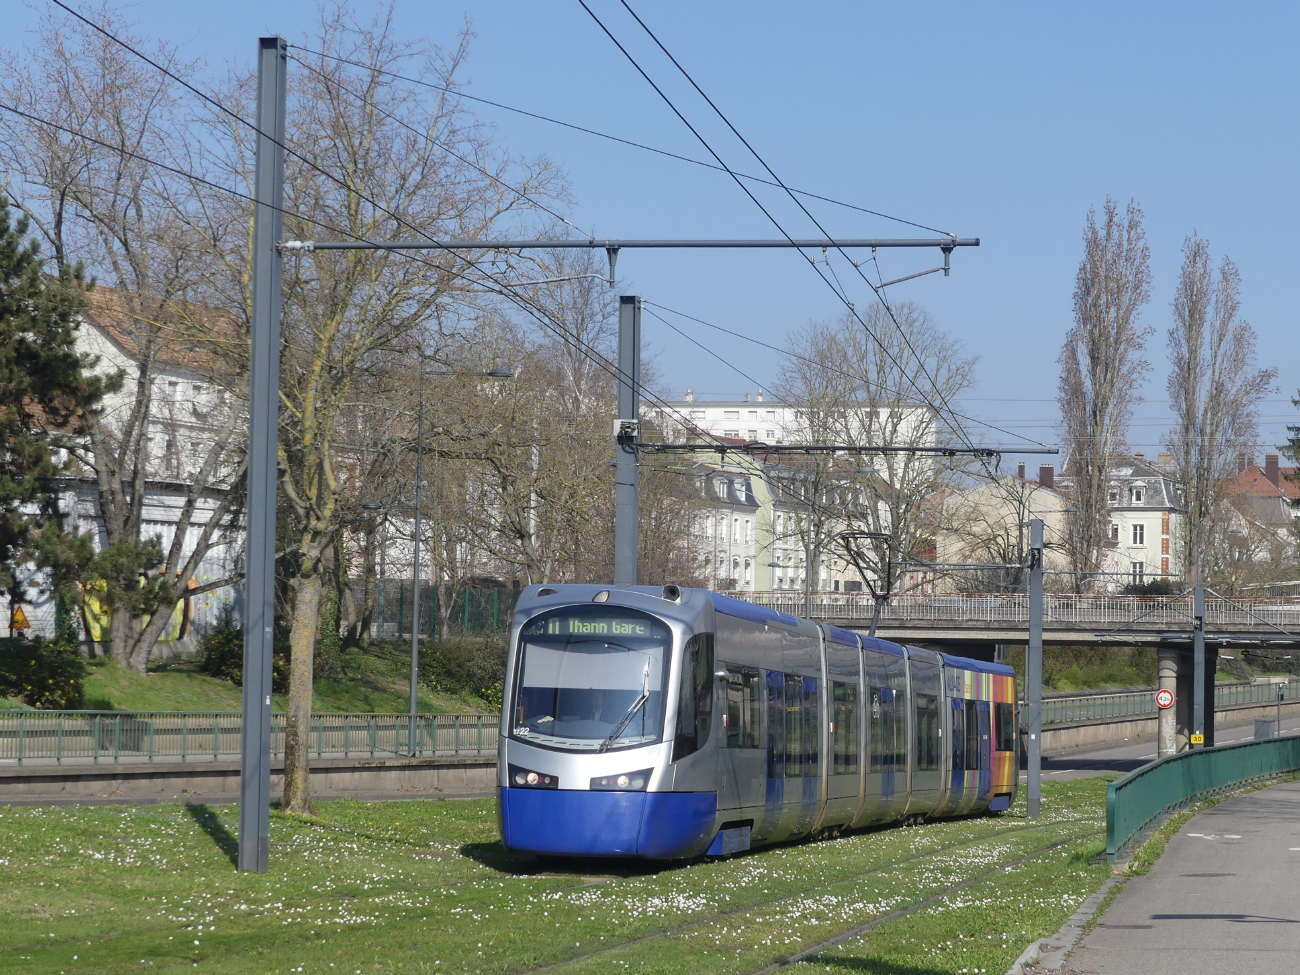 Mulhouse, Siemens Avanto/S70 — TT22 (U 25543/44)